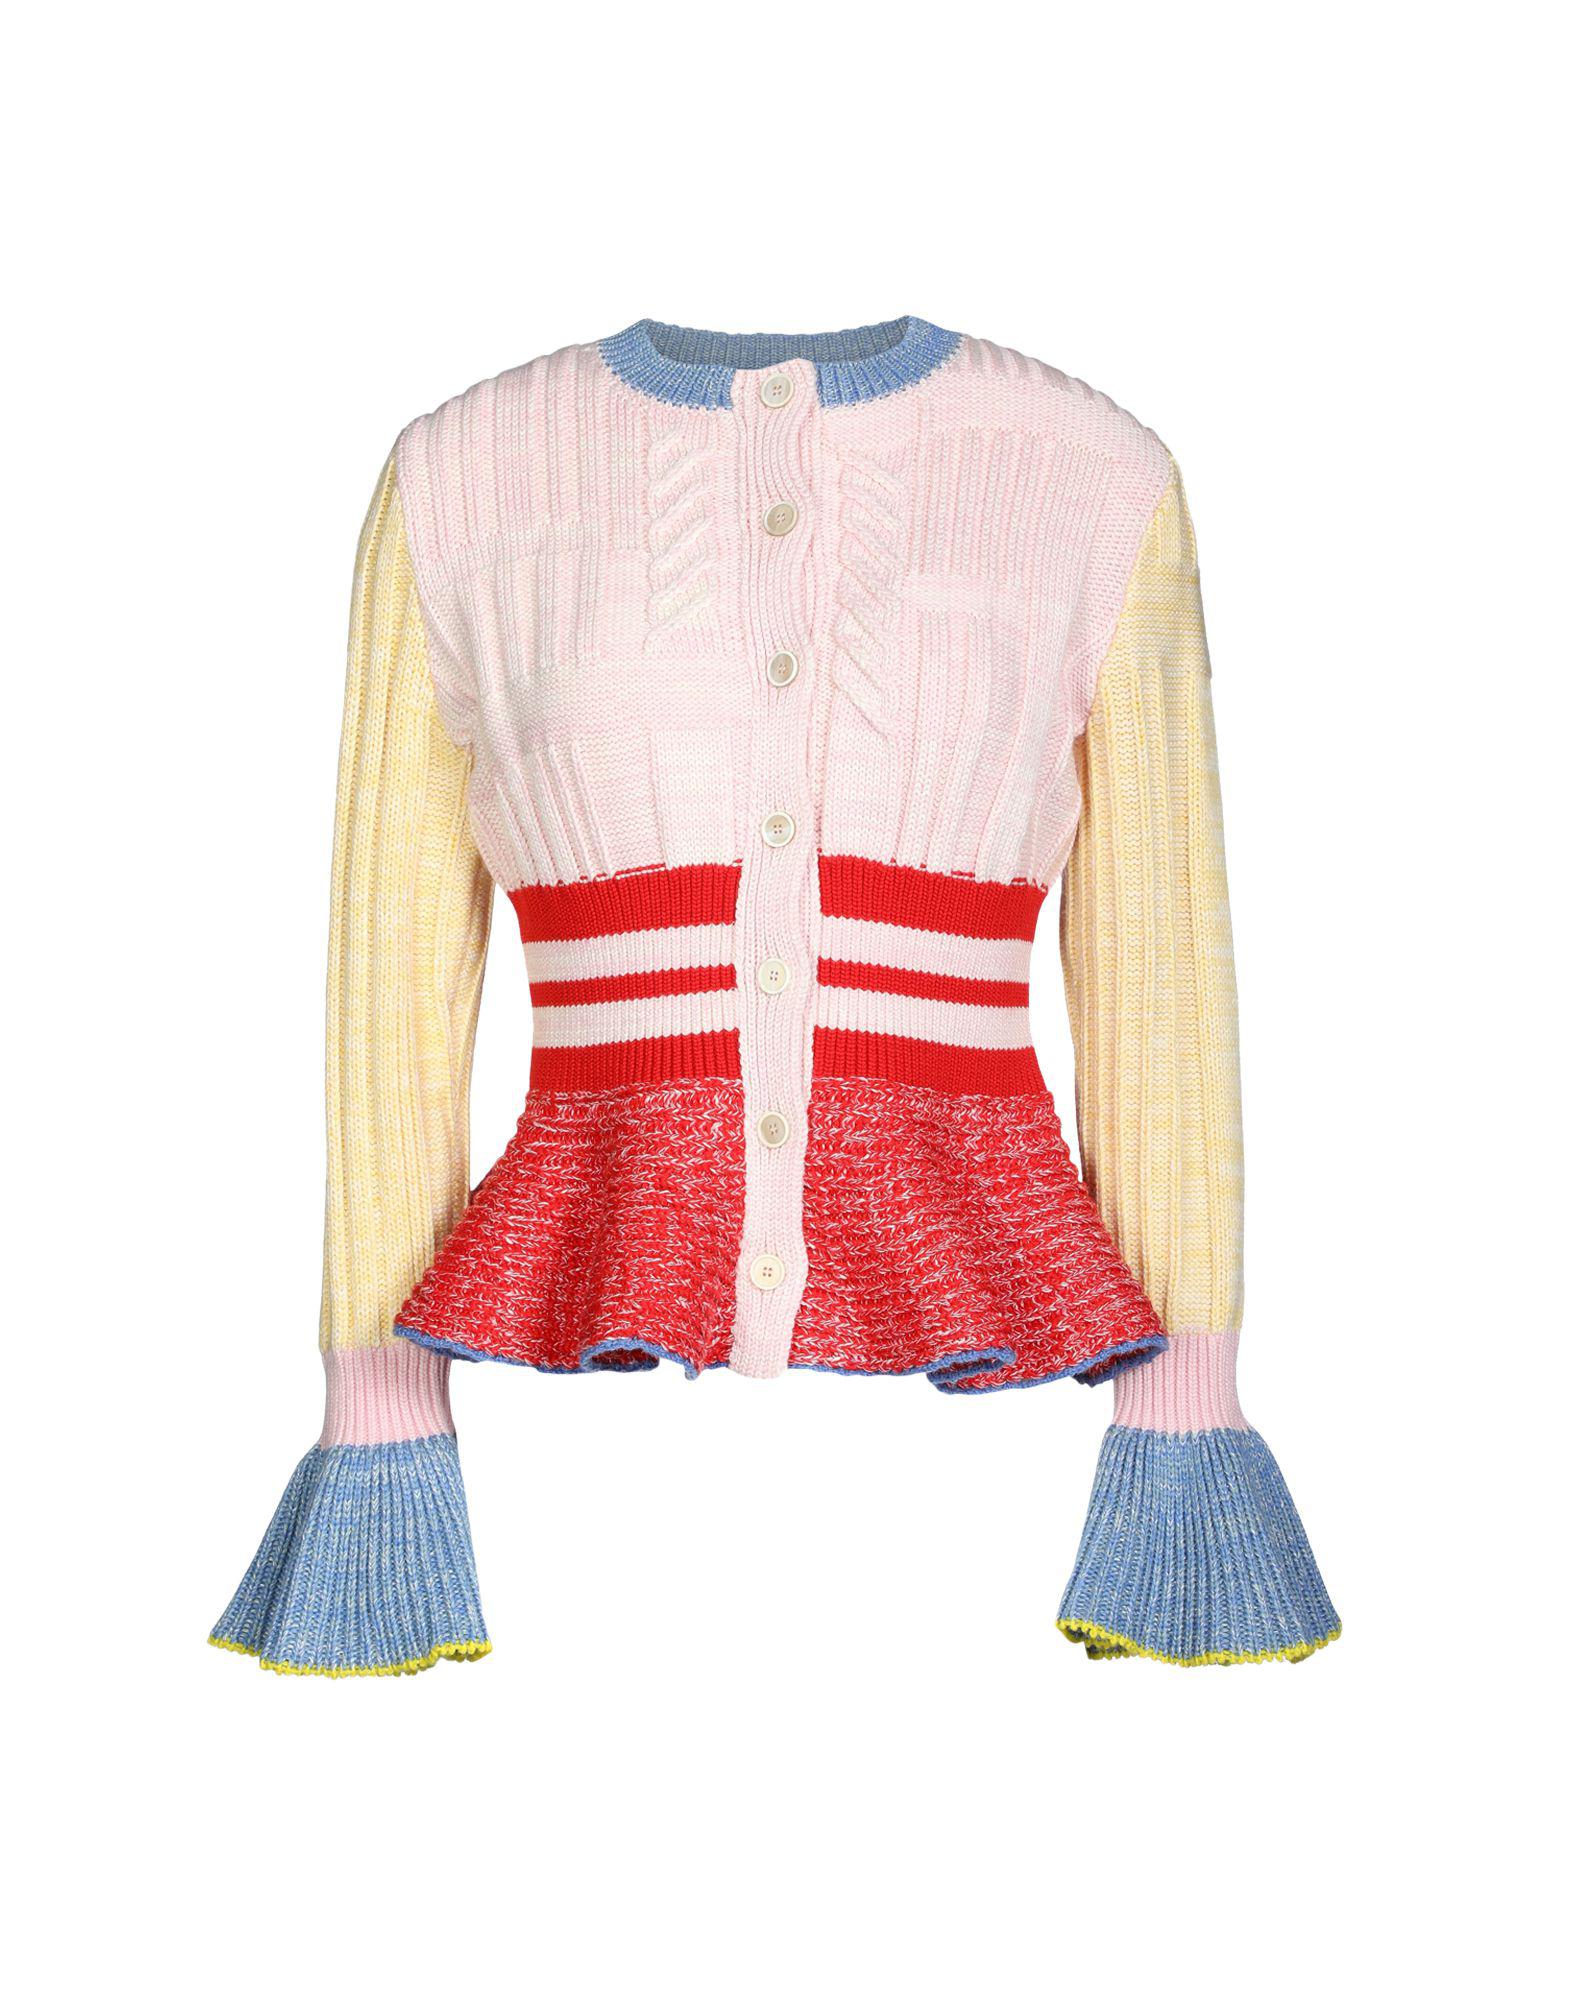 Alexander McQueen Wool Sweater in Light Pink (Pink) - Lyst